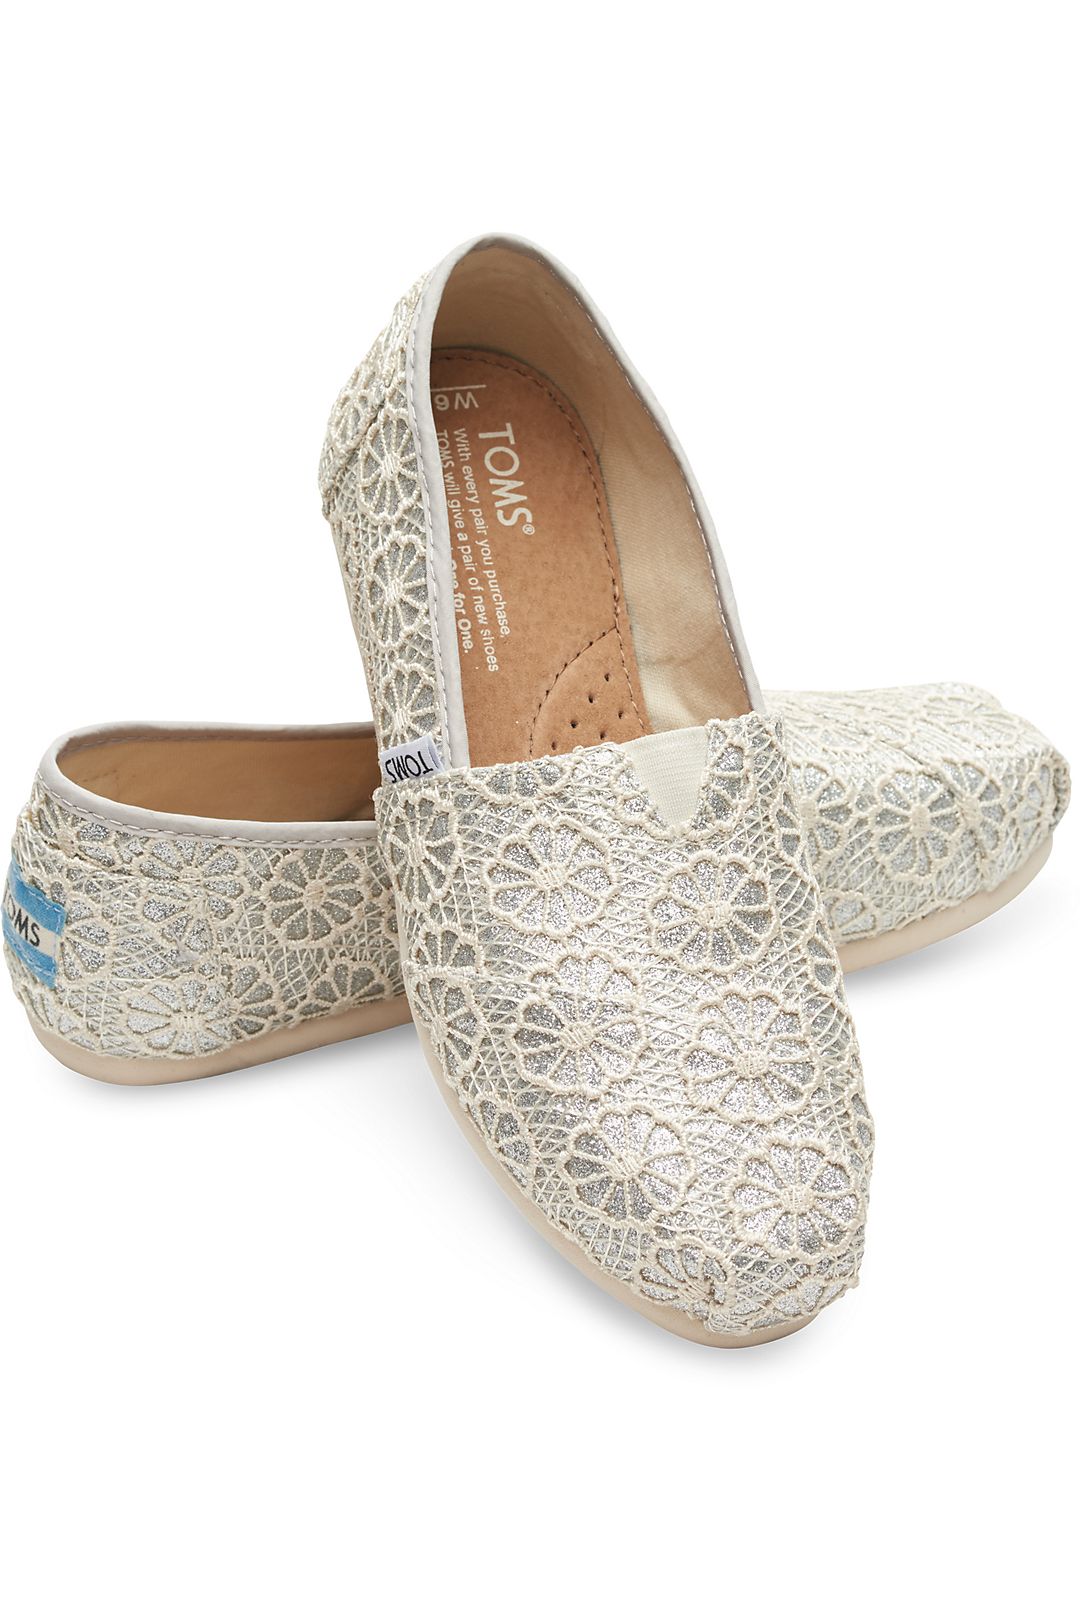 gevechten lancering gevoeligheid TOMS Crochet Glitter Classic Slip-On Shoes | David's Bridal